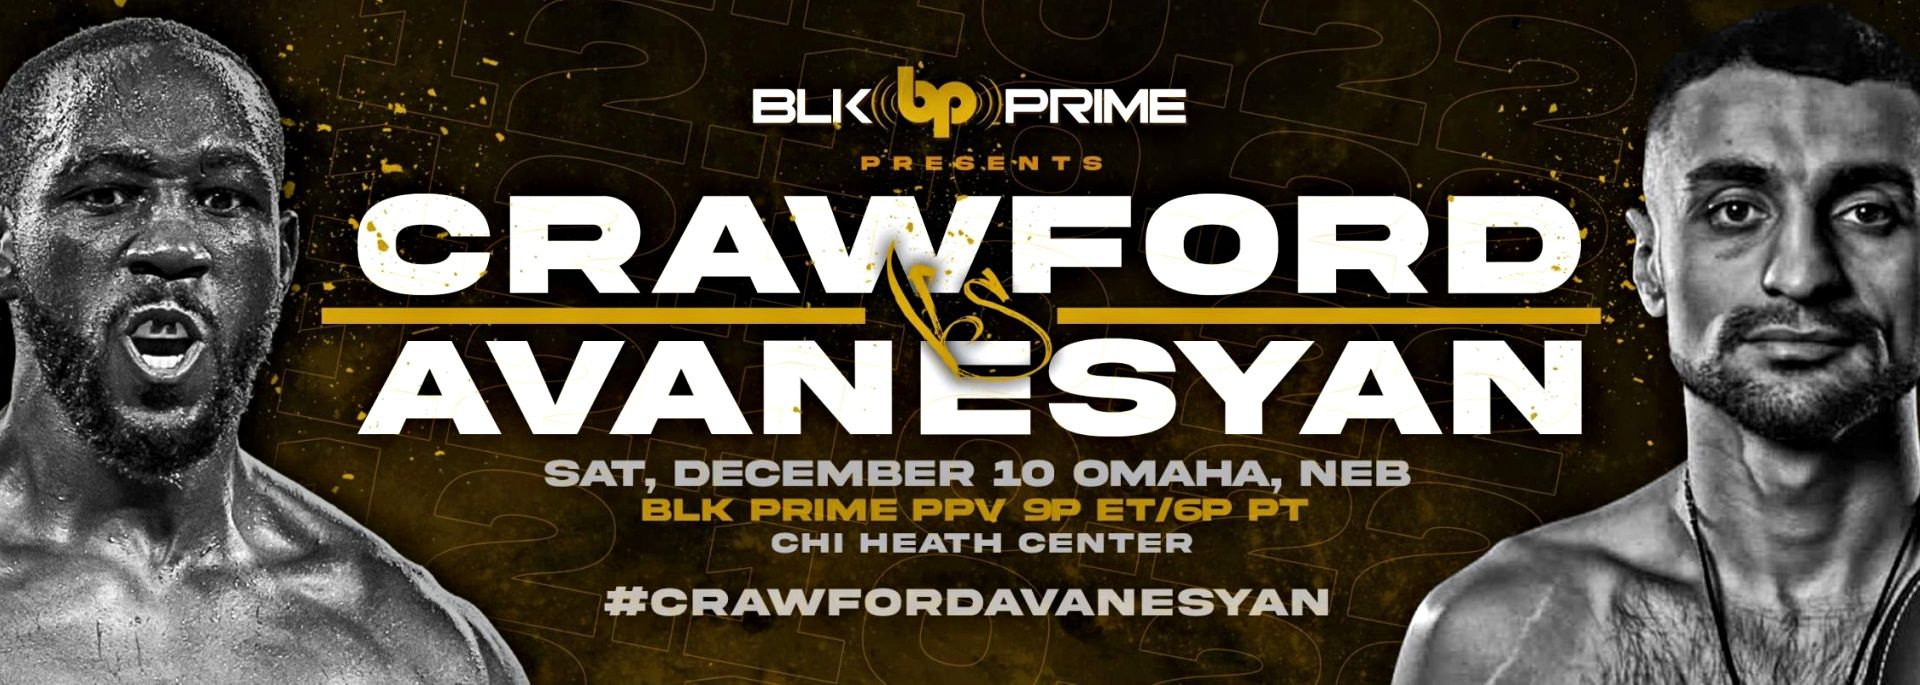 Crawford vs Avanesyan: BLK Prime Enters The Boxing Scene